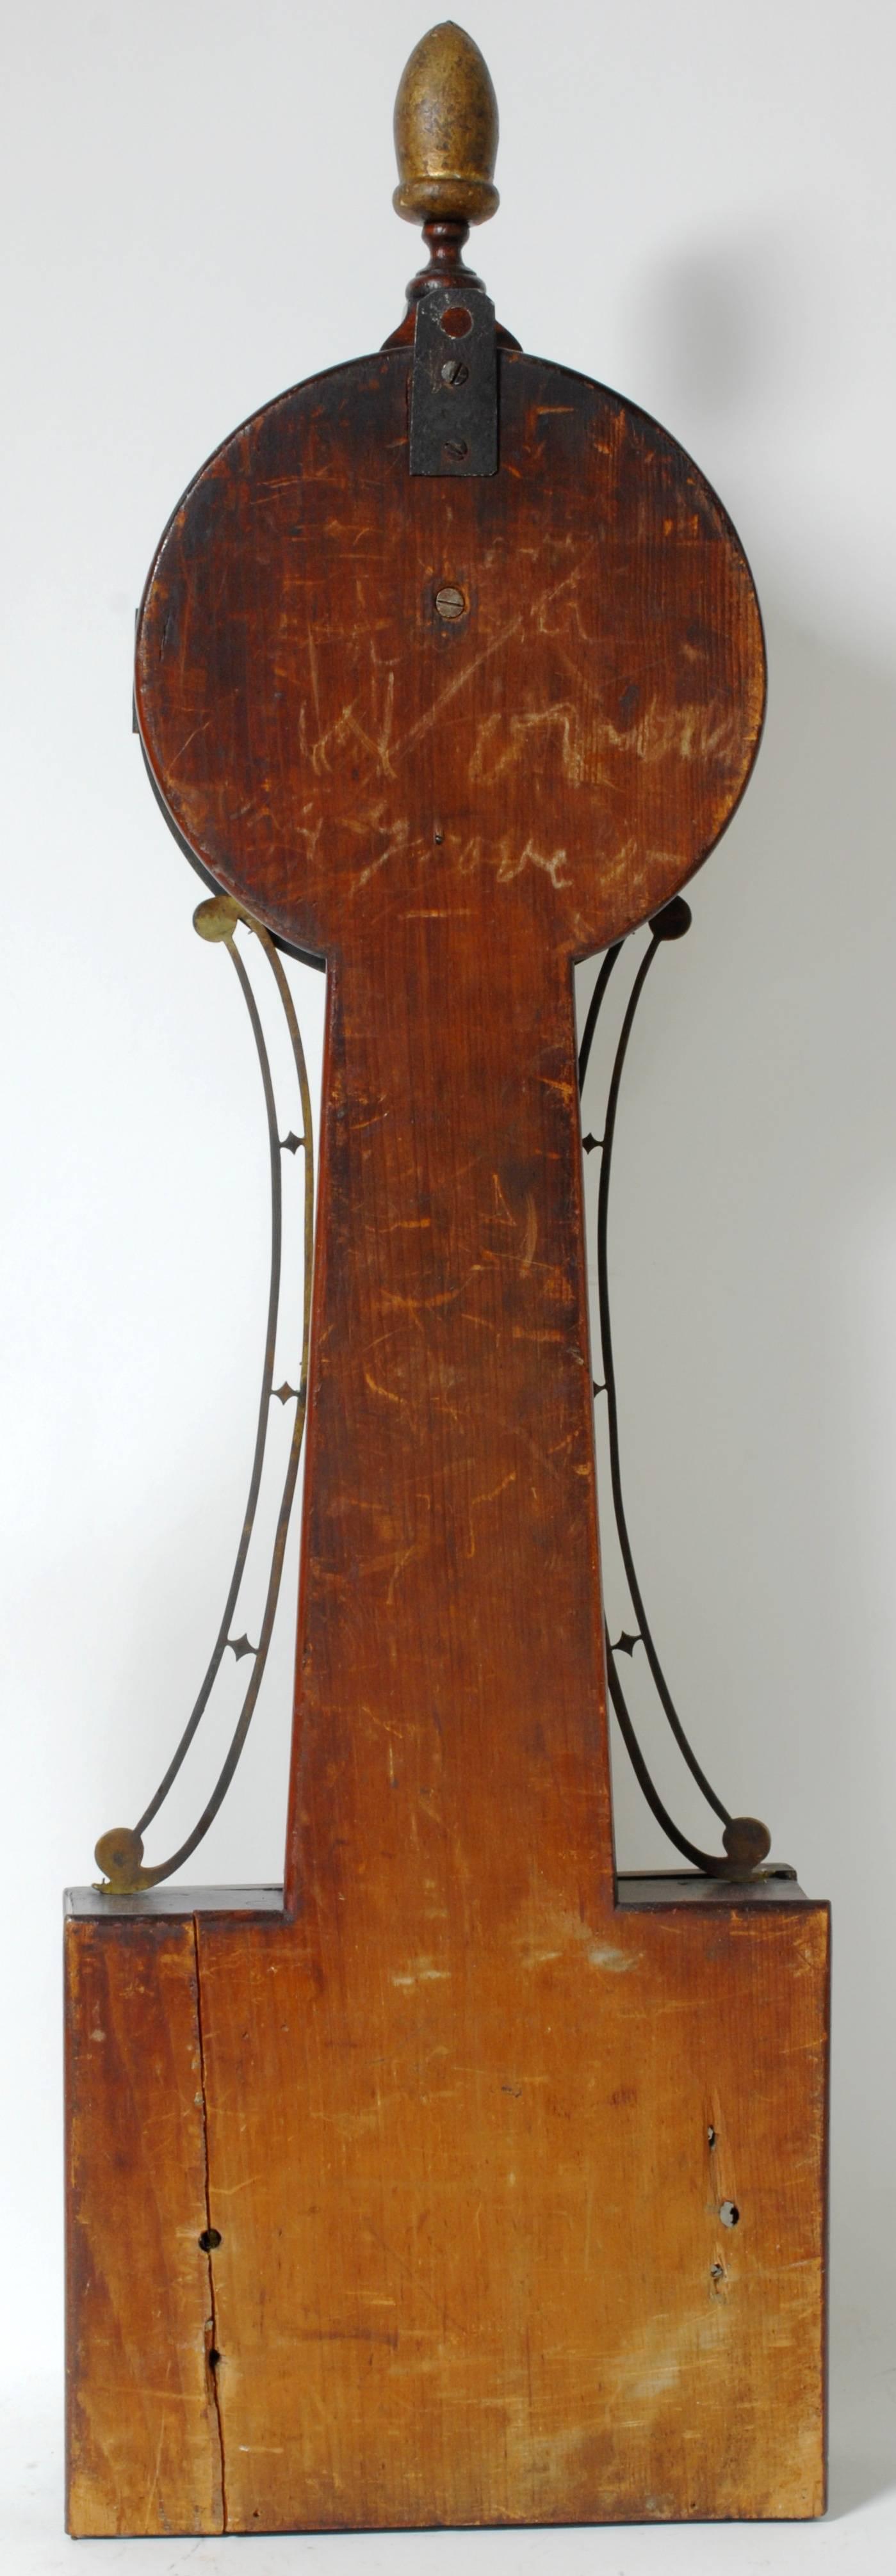 Brass Banjo Clock, circa 1820, Antique Patent Timepiece